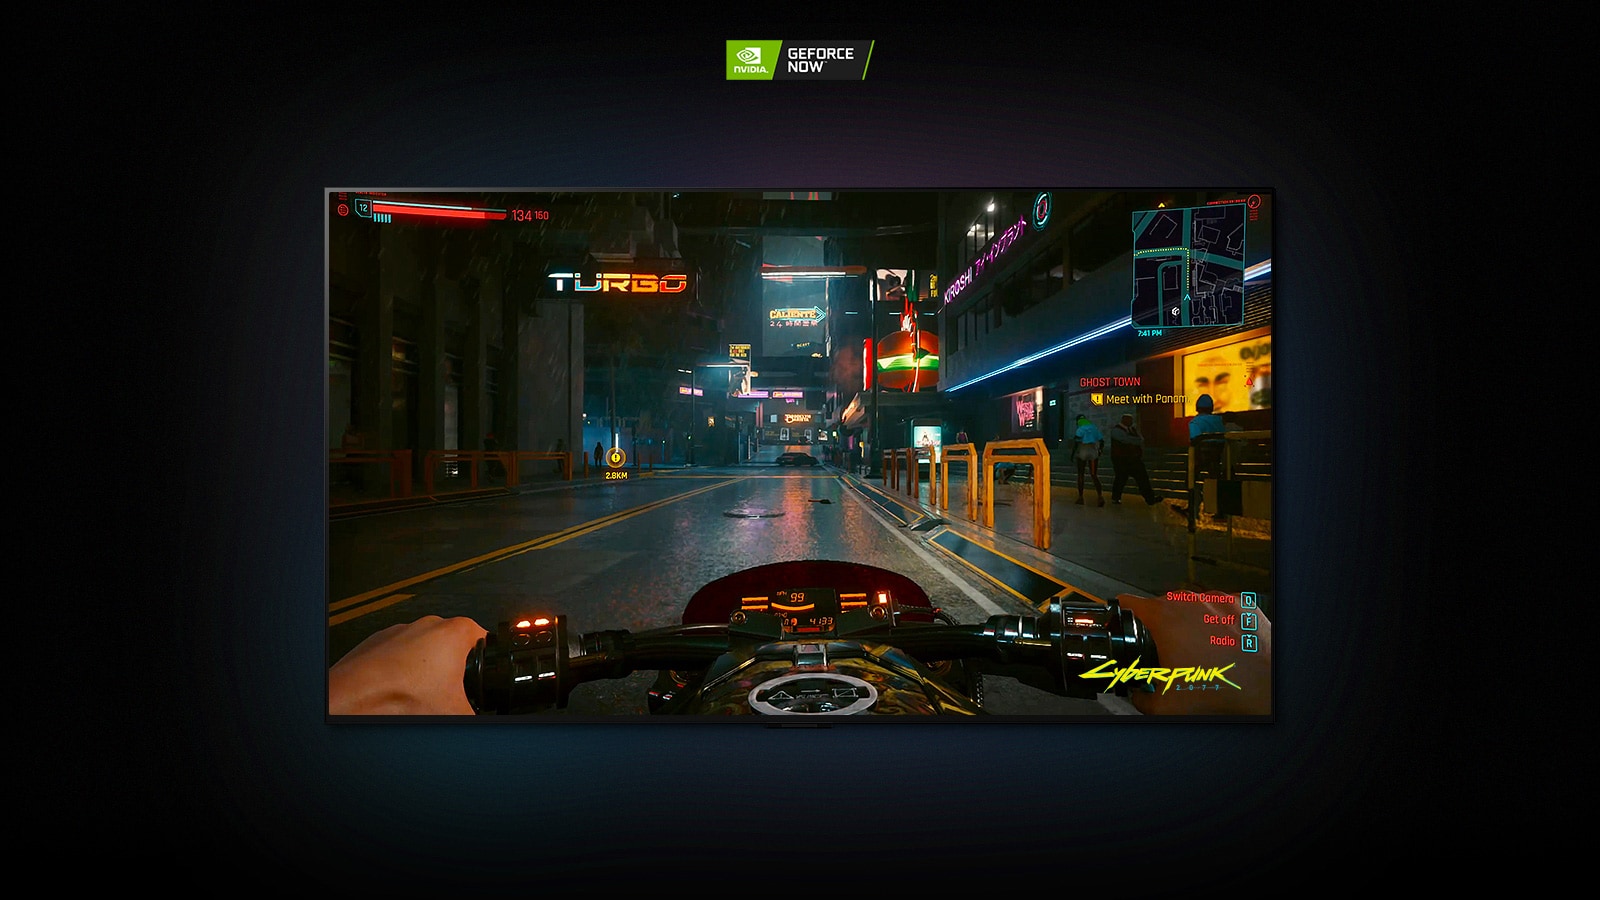 LG OLED اسکرین پر نشر ہونے والے سائبرپنک 2077 منظر میں ، کھلاڑی نیین لیٹ اسٹریٹ میں موٹرسائیکل چلا رہا ہے